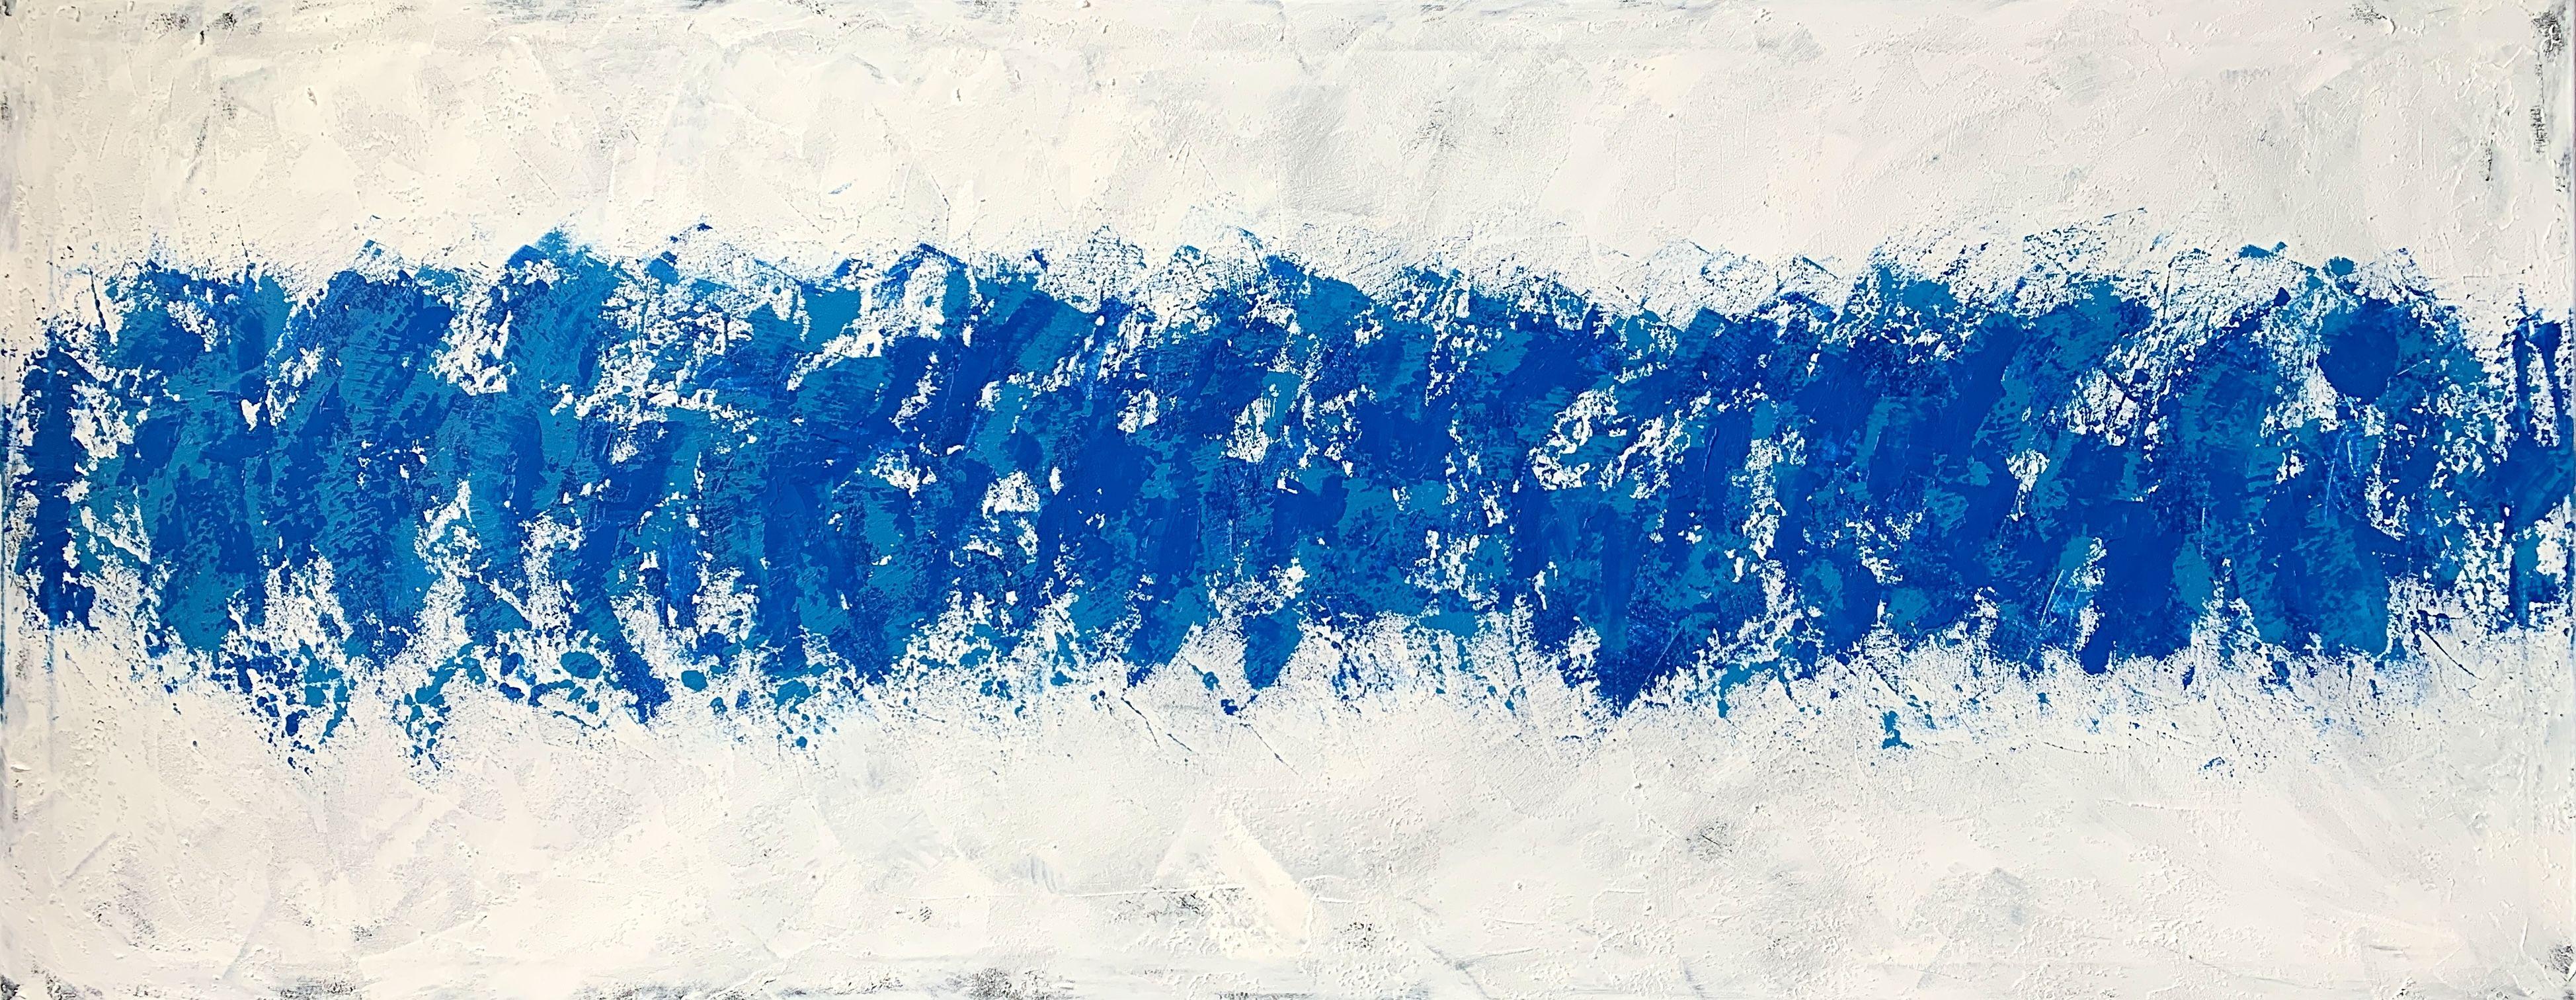 Beyond the sea Nr. 1423 Blau und Weiß, Gemälde, Acryl auf Leinwand